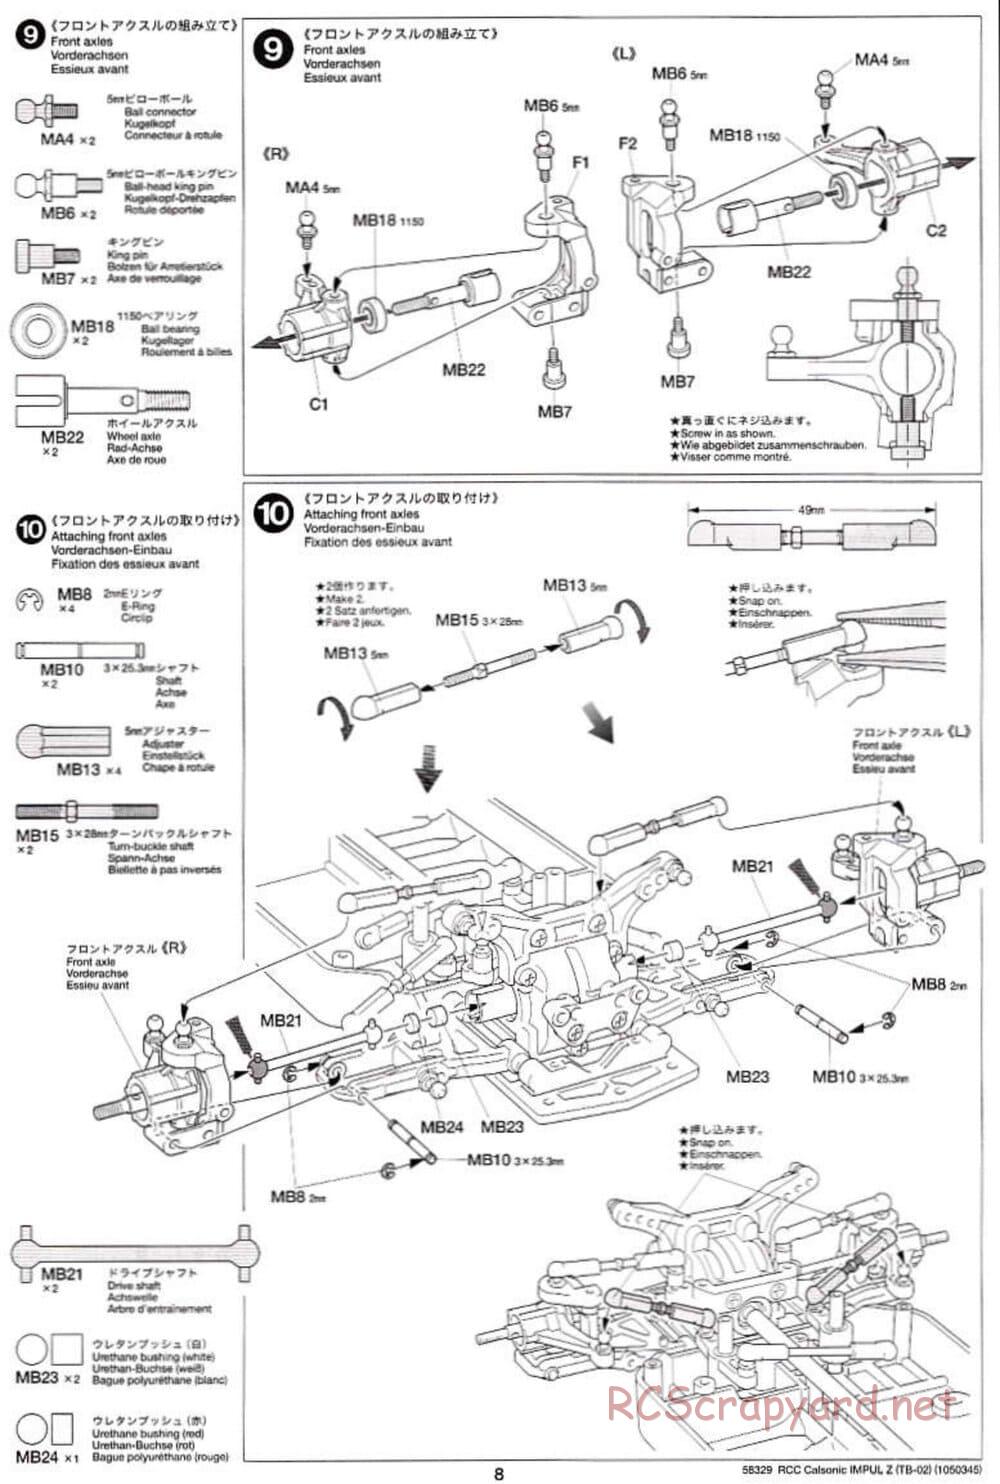 Tamiya - Calsonic Impul Z - TB-02 Chassis - Manual - Page 8